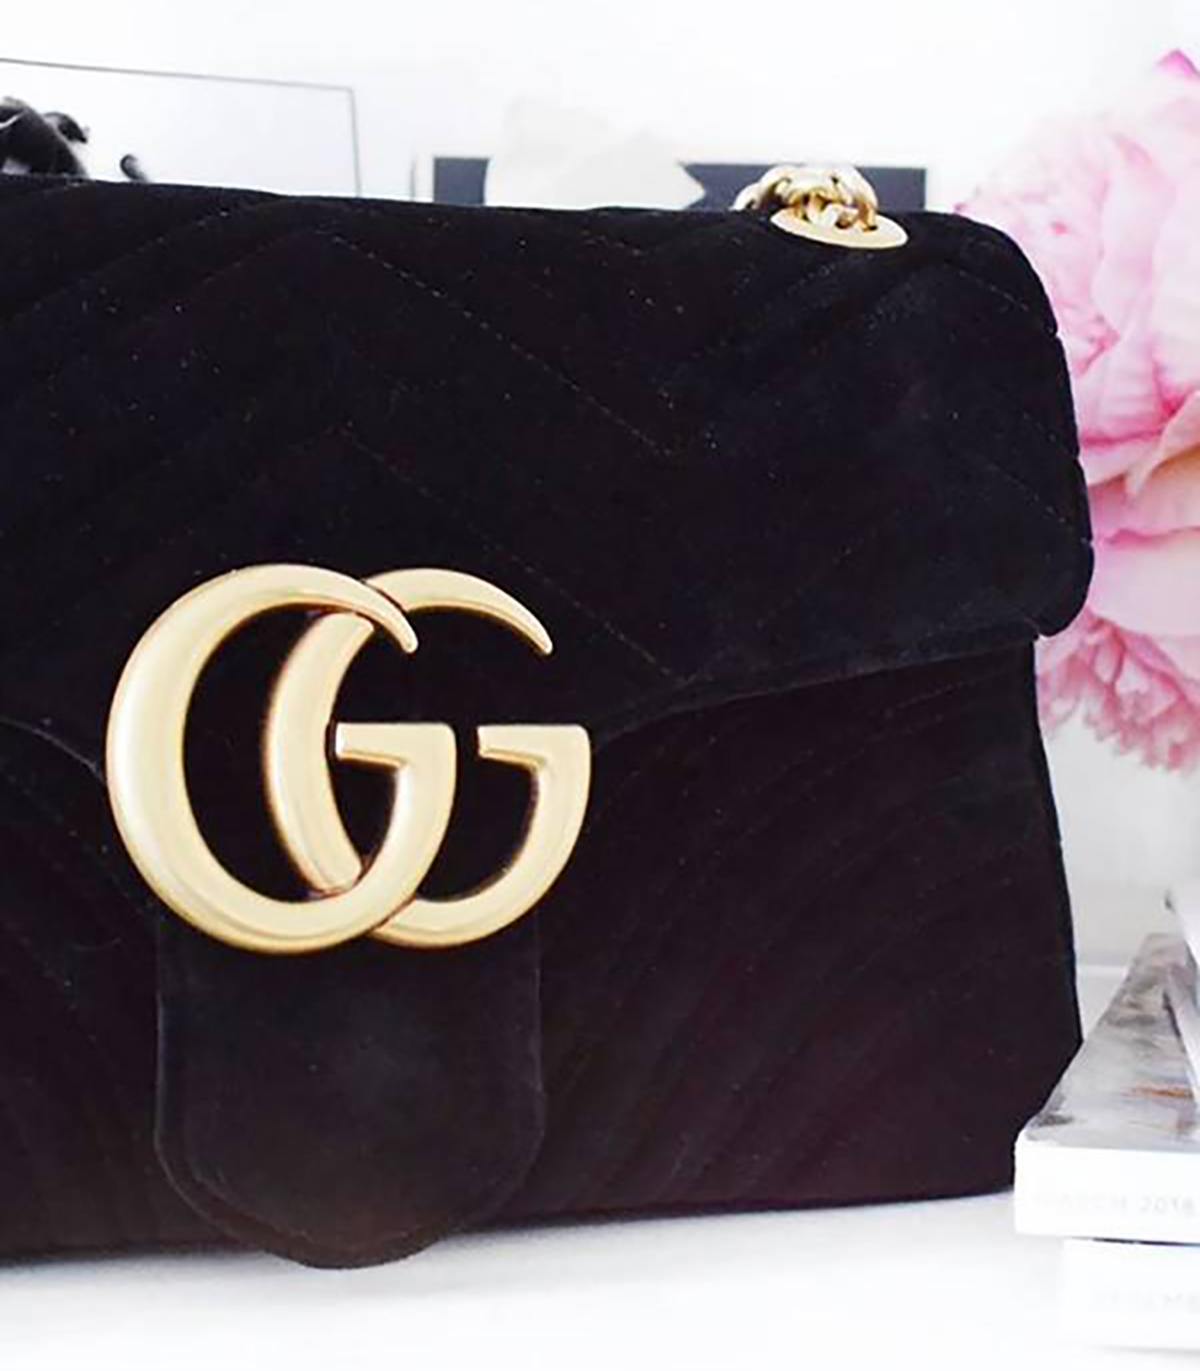 My Gucci Marmont Handbag